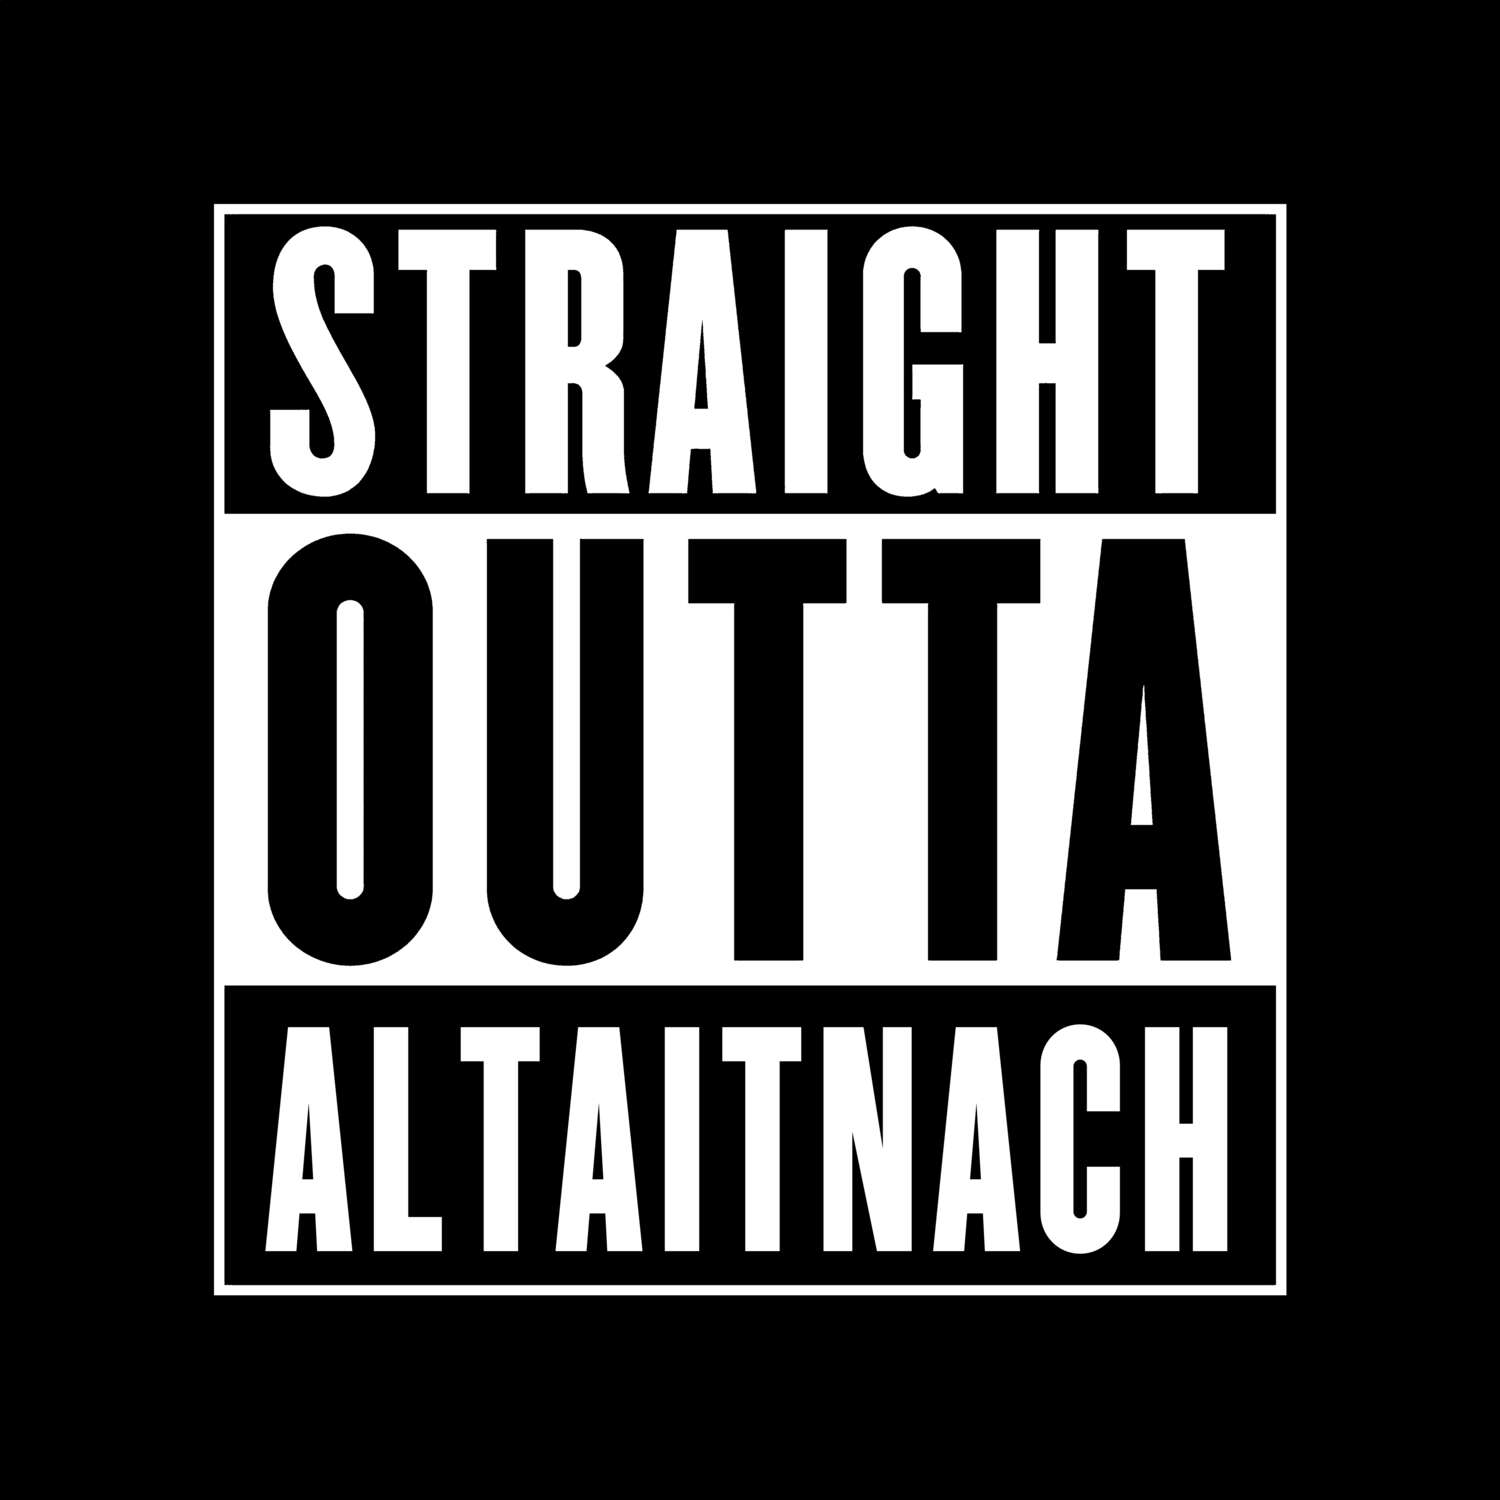 Altaitnach T-Shirt »Straight Outta«